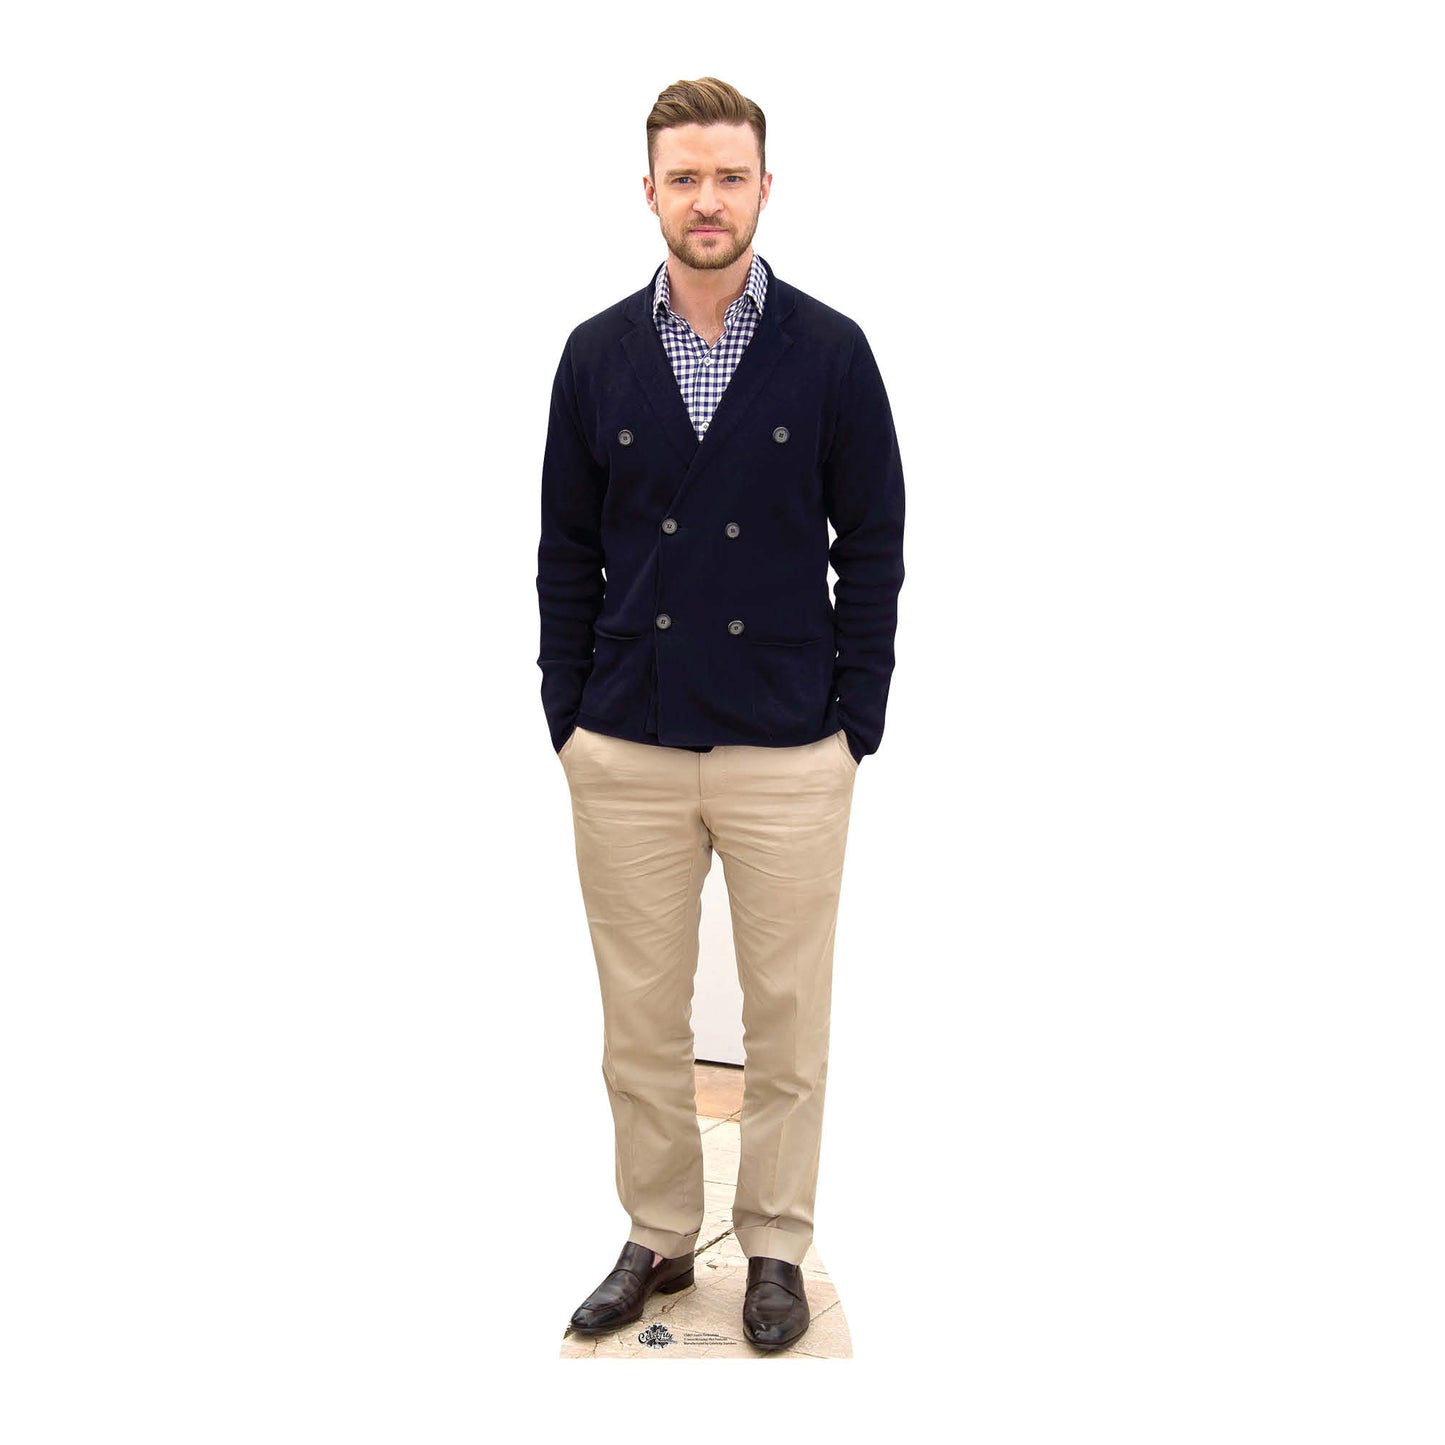 CS607 Justin Timberlake Height 182cm Lifesize Cardboard Cutout